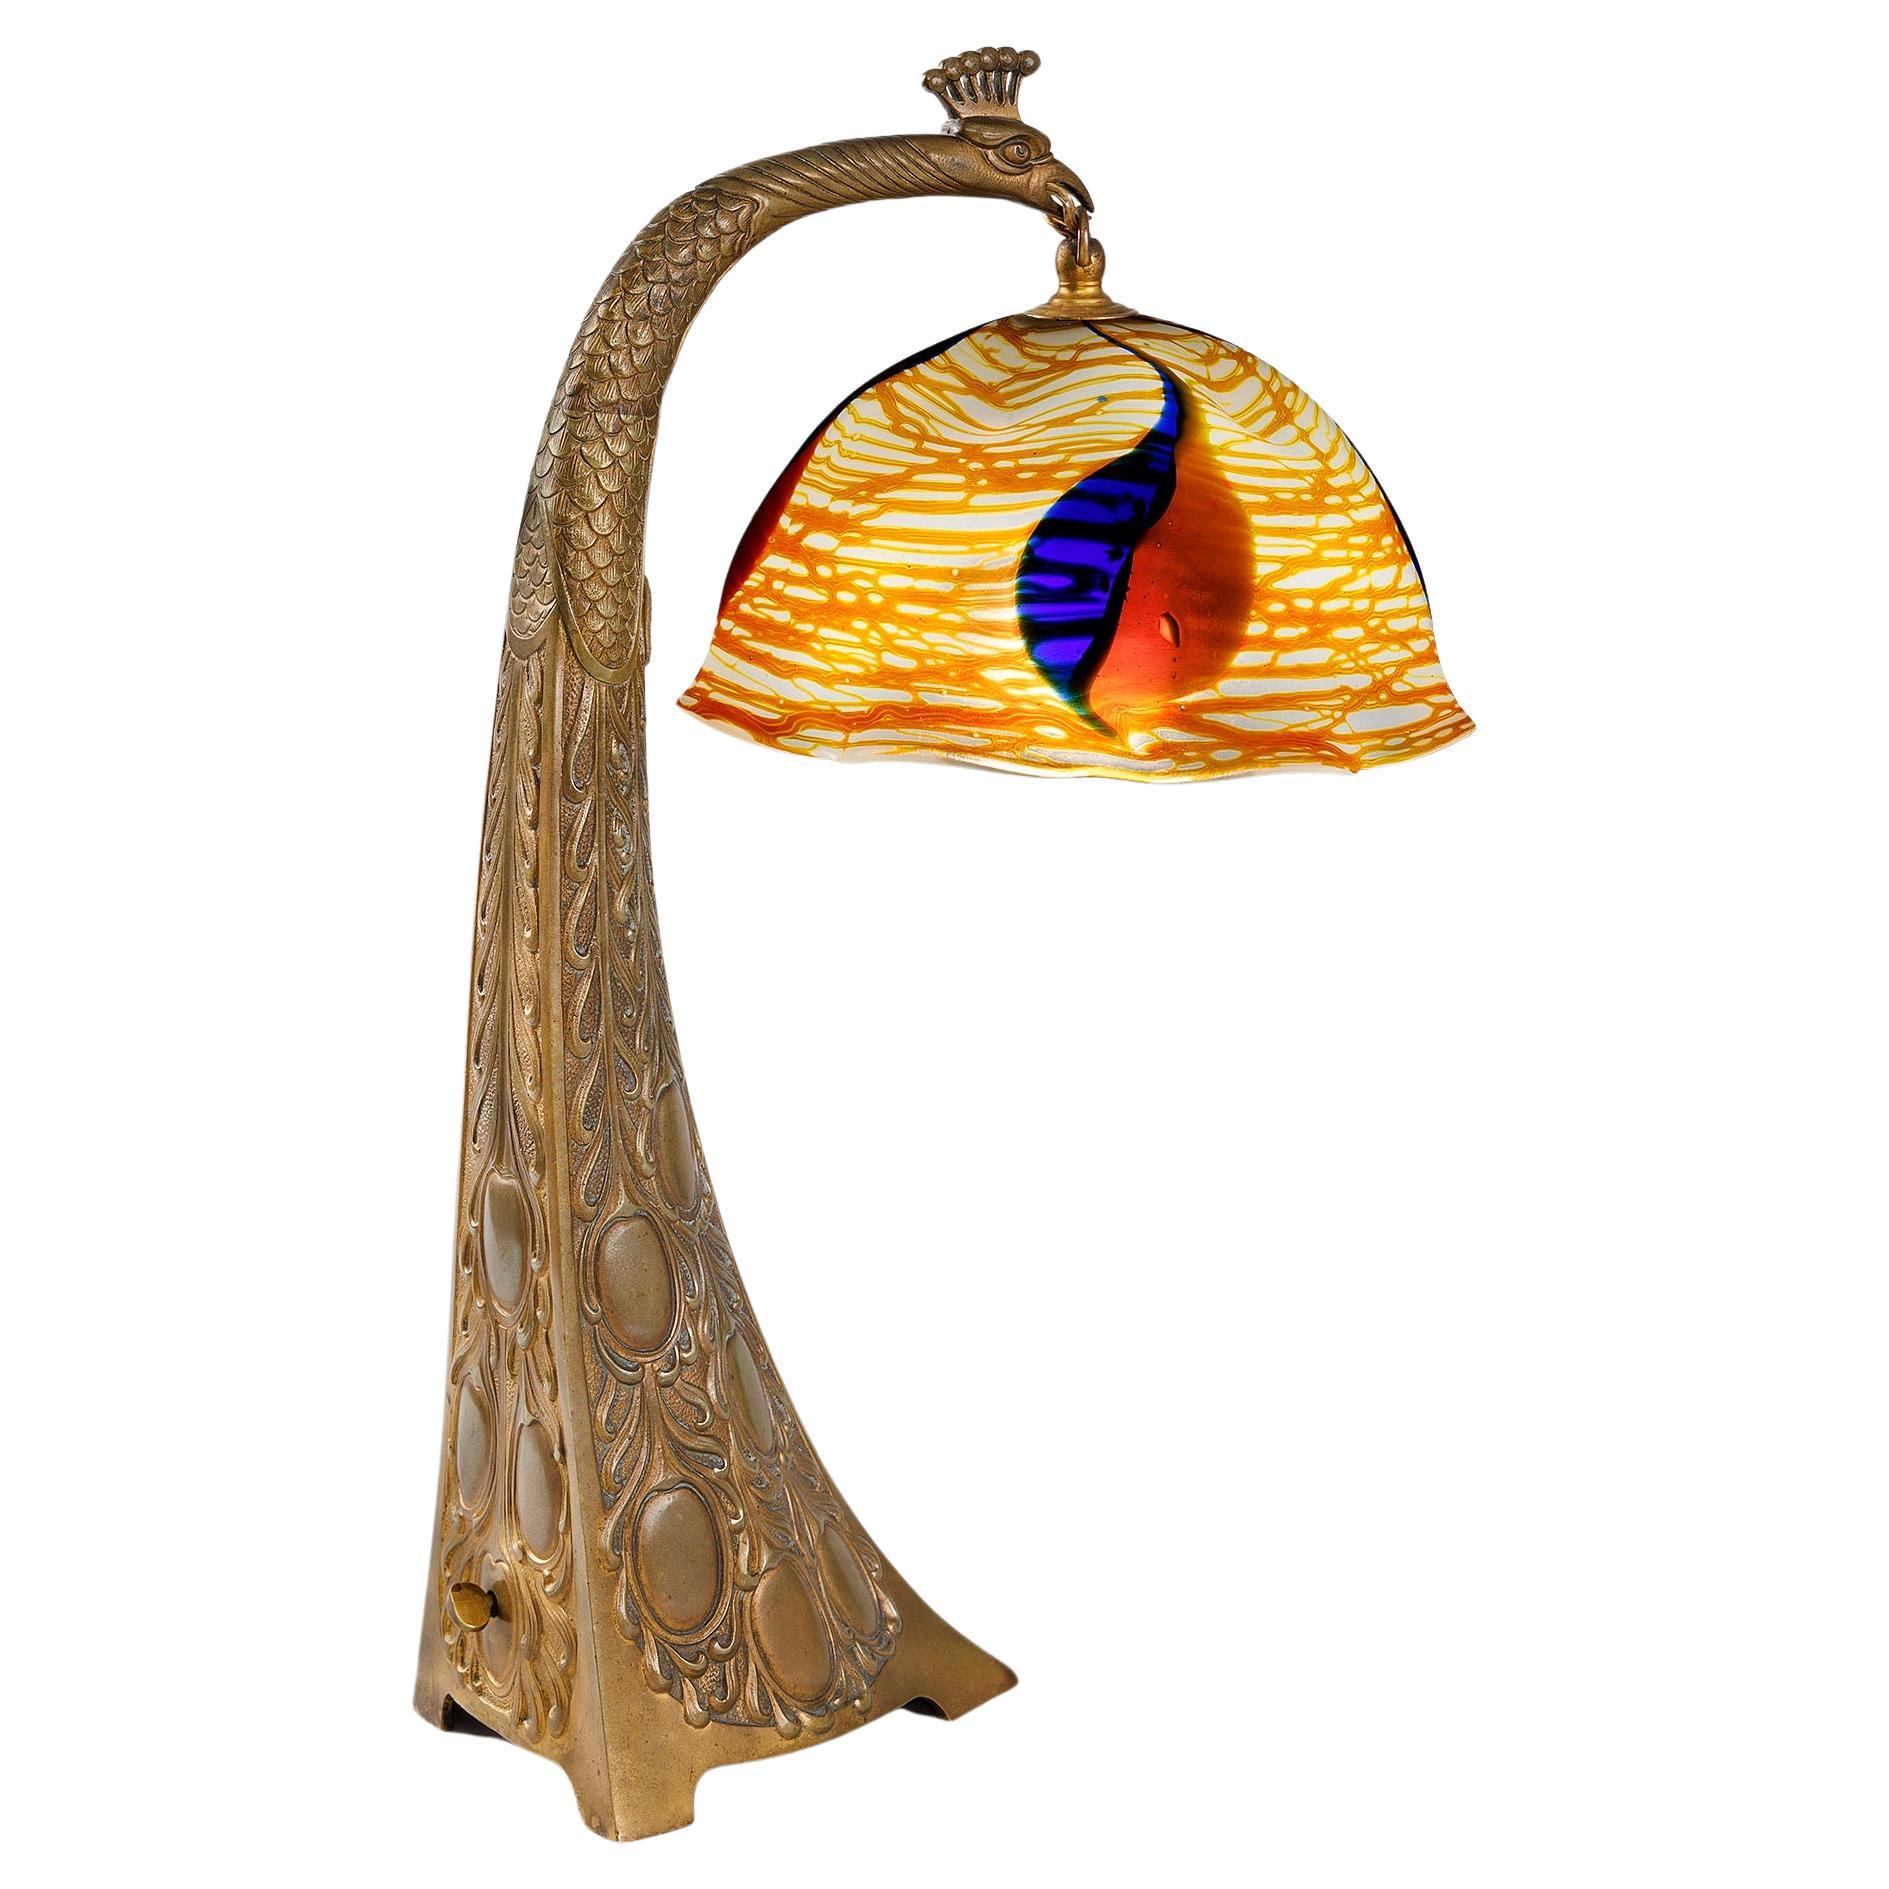 Loetz "Peacock" Table Lamp